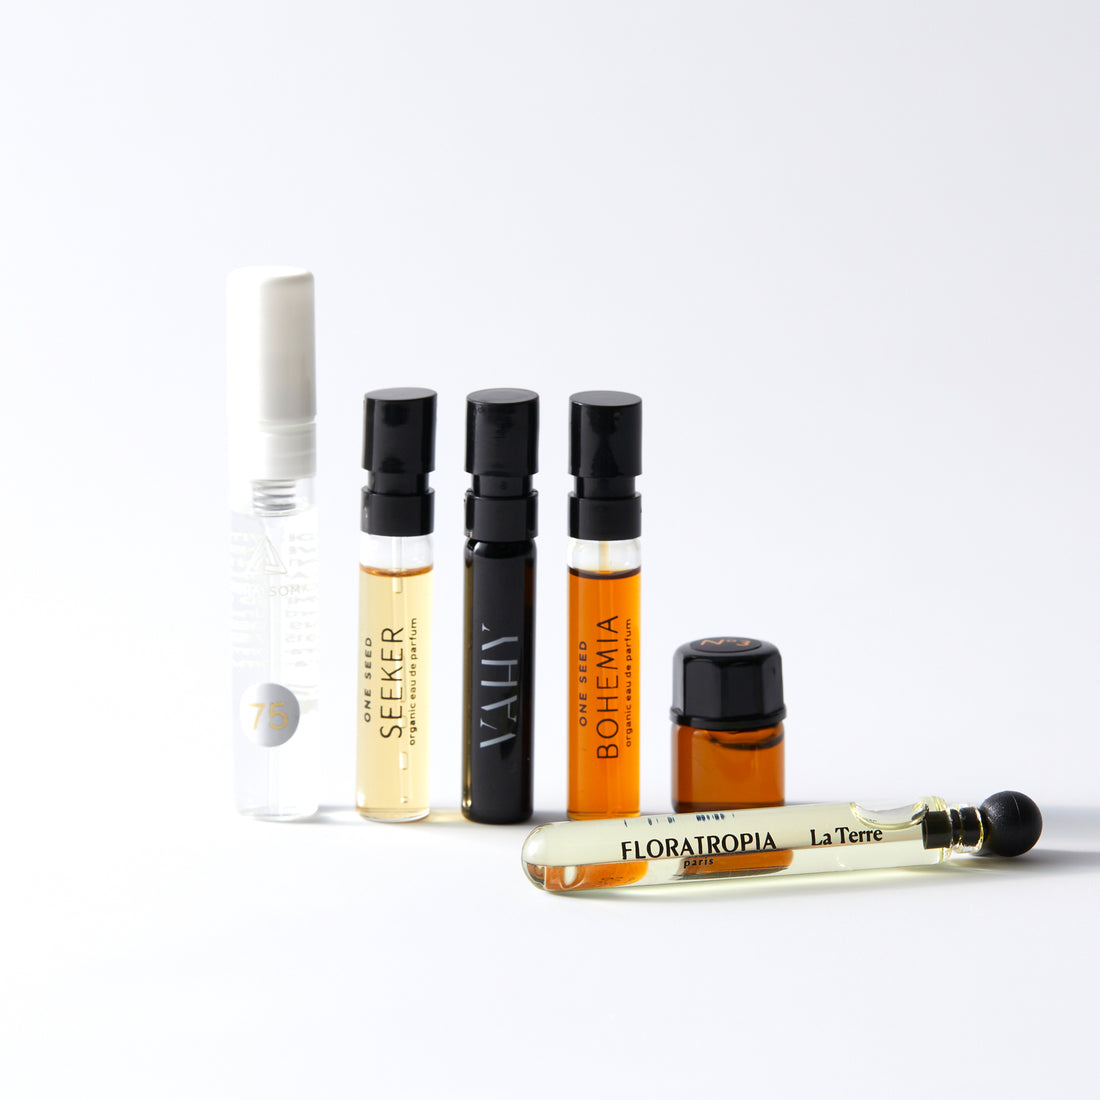 Miniature perfume samples